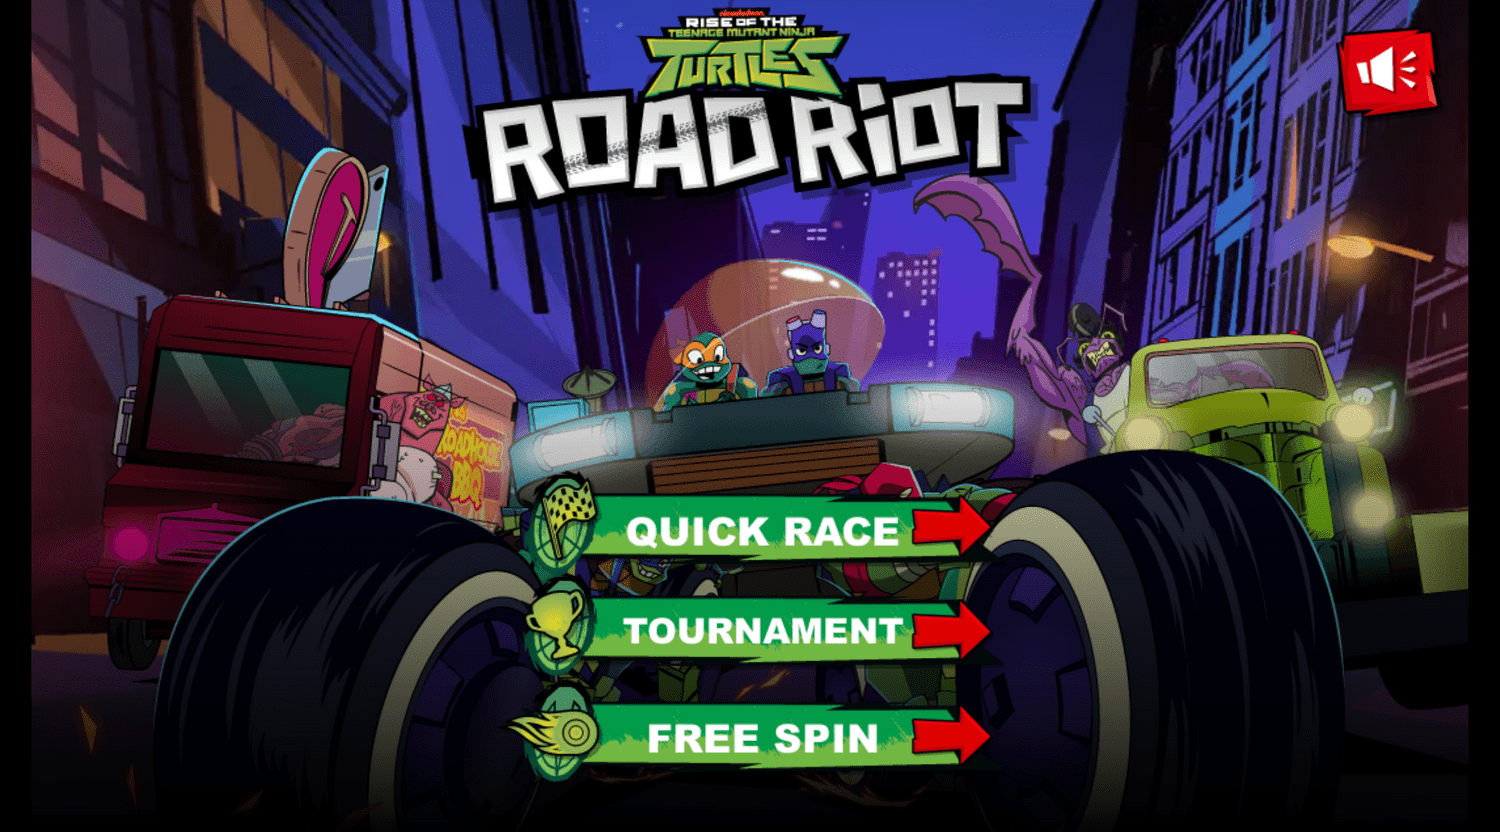 Teenage Mutant Ninja Turtles Road Riot Game Start Screen.